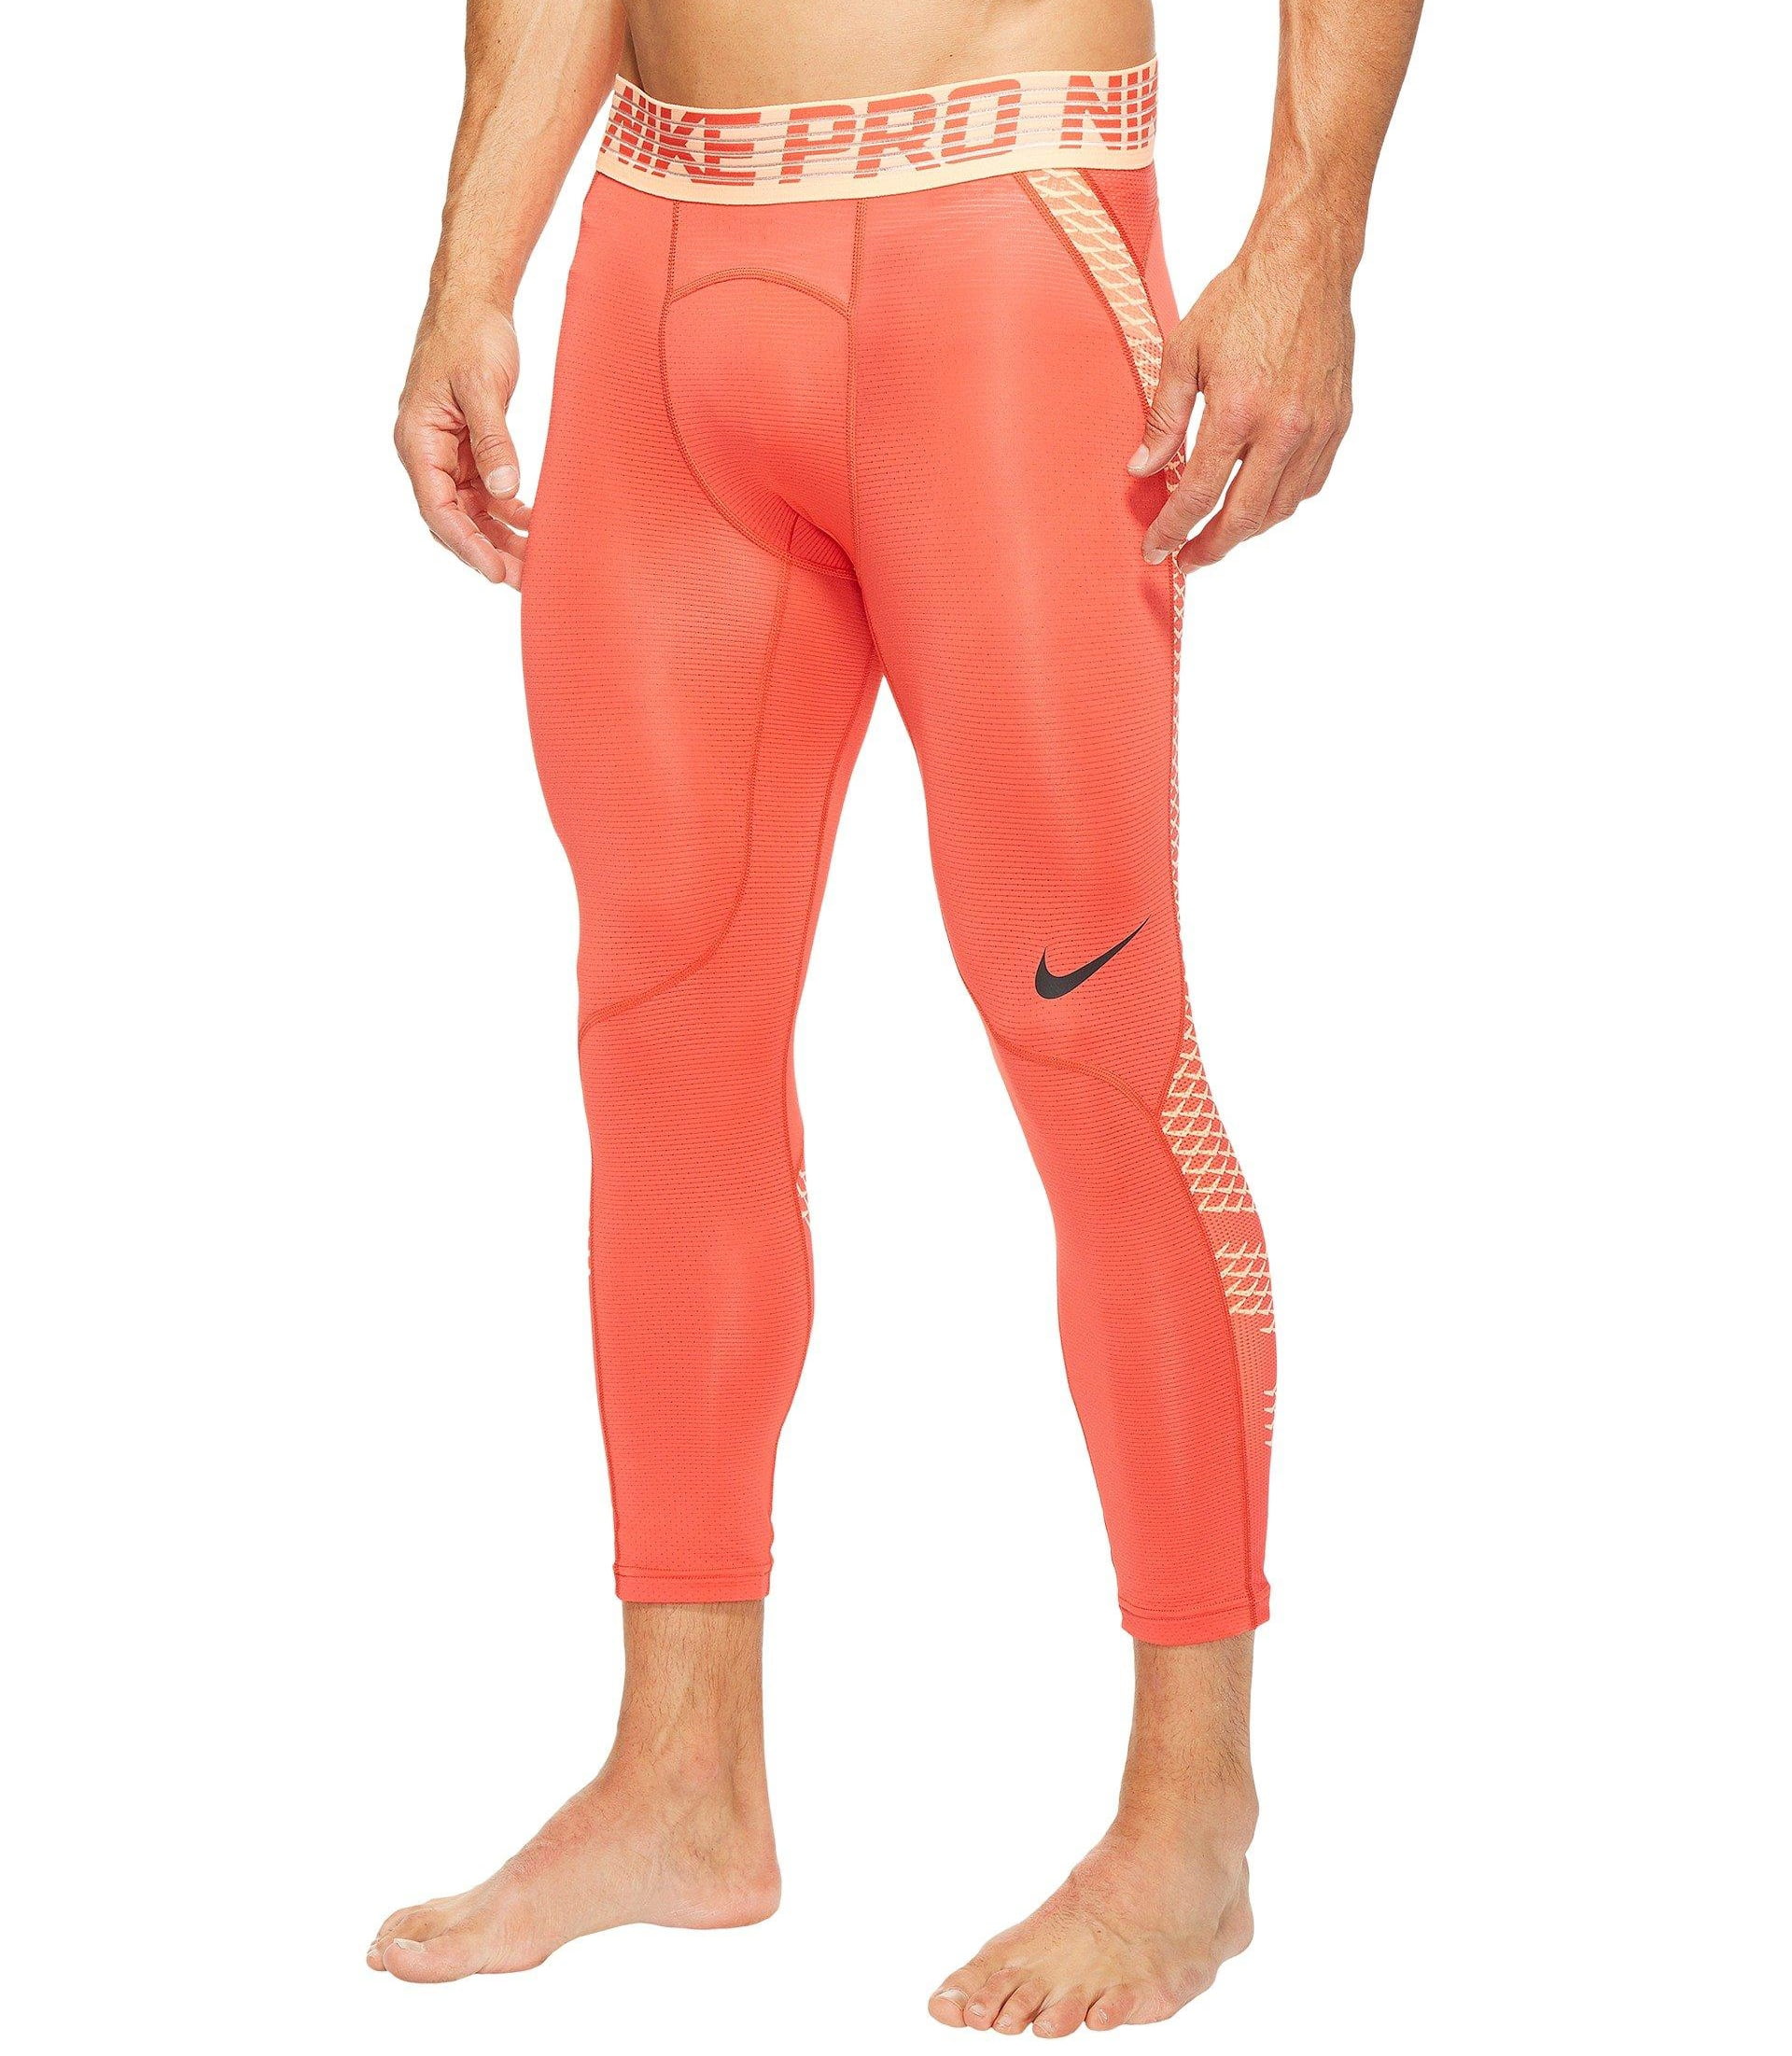 Nike Pro Hypercool 3/4 Men's Compression Tights Pants Size 2XL 